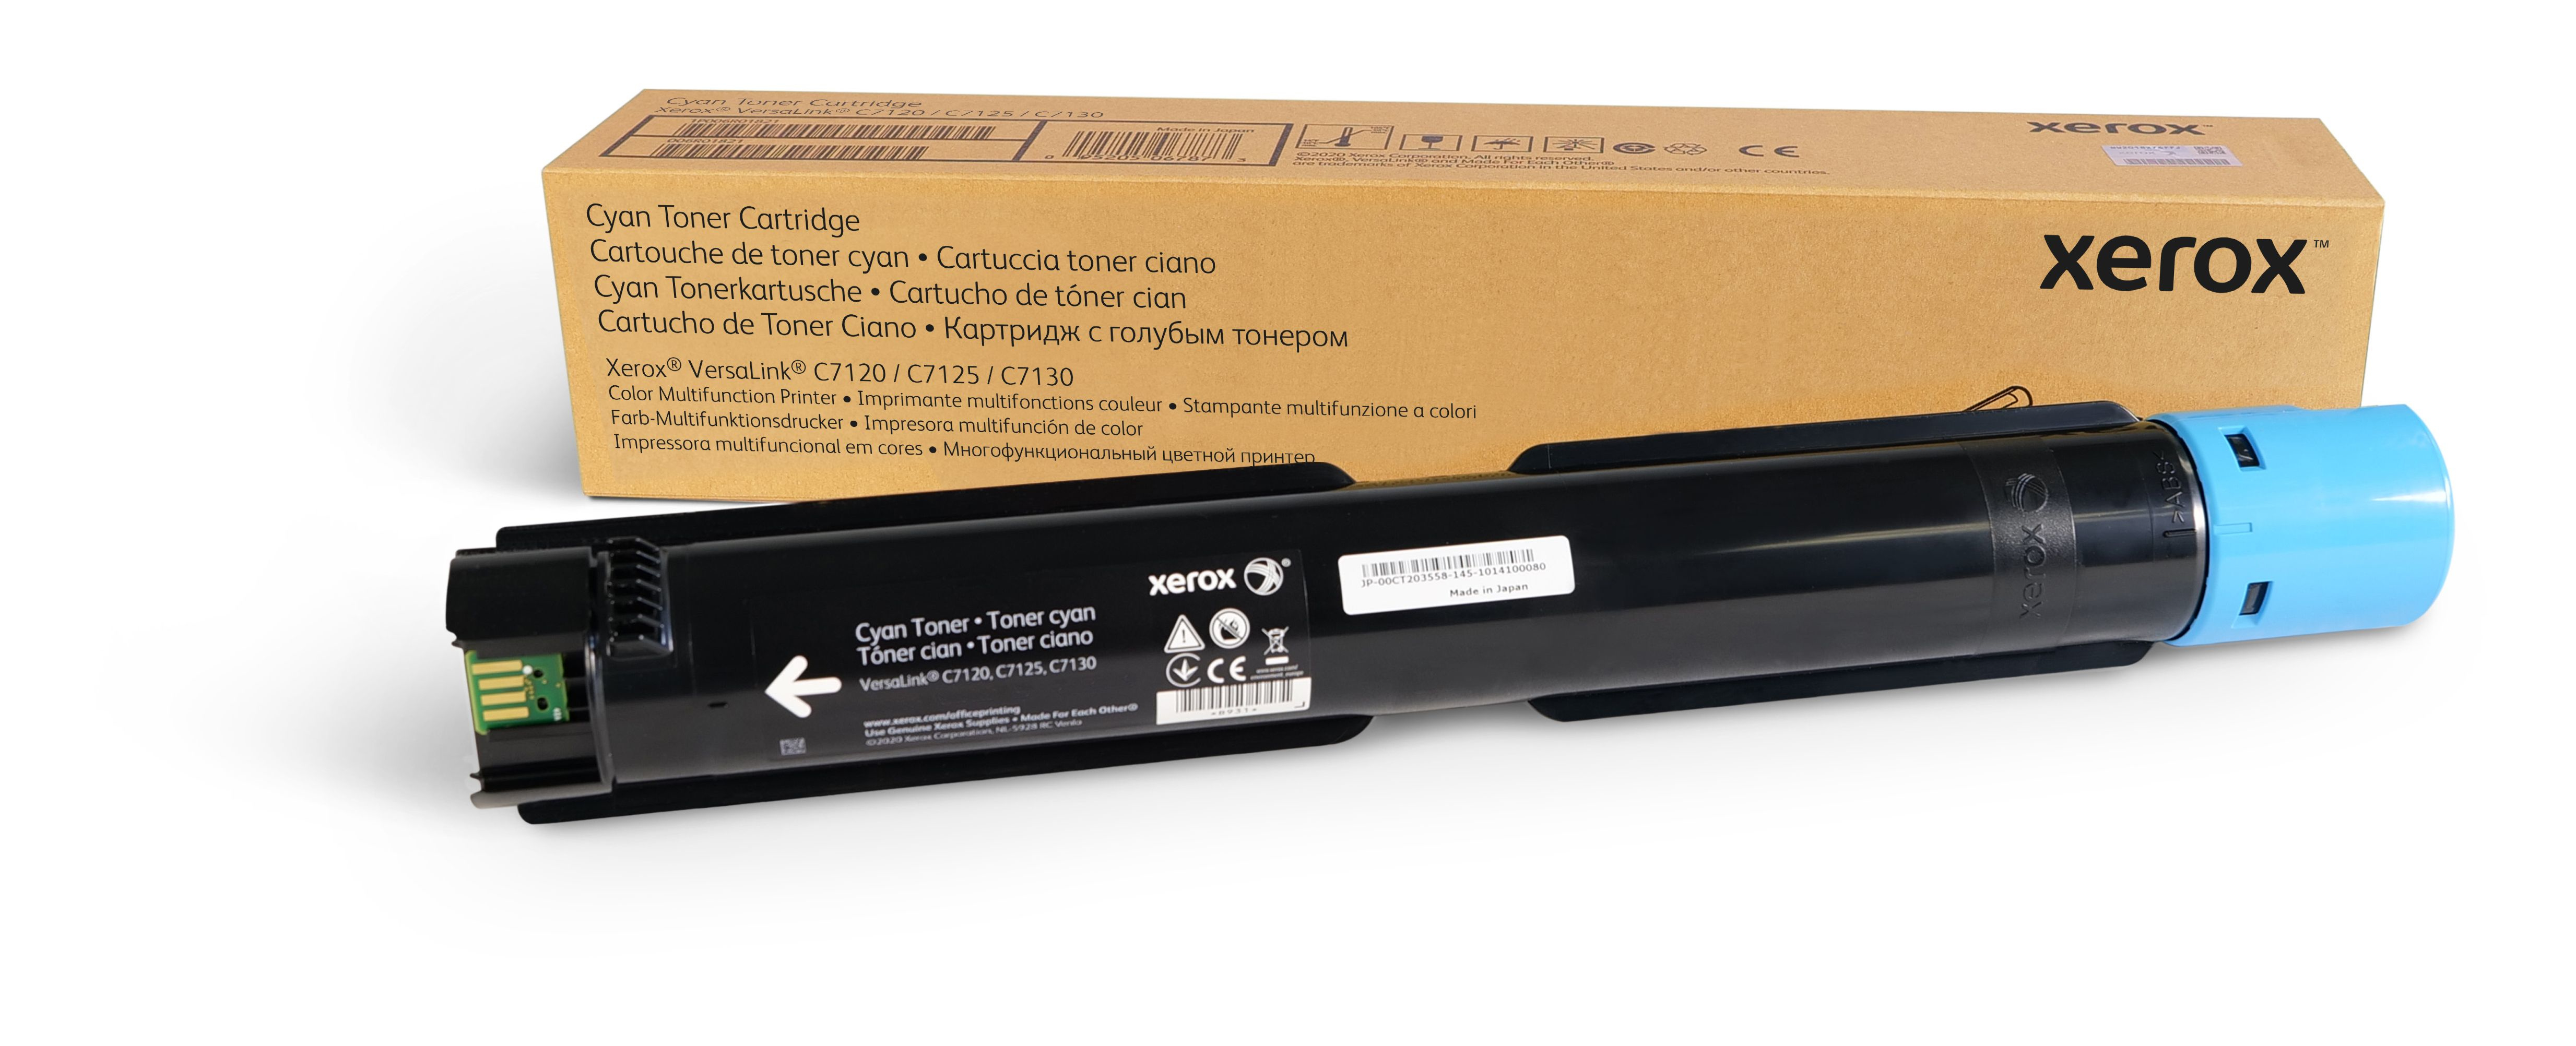 Xerox - Cyan - Original - Toner Cartridge - For VersaLink C7120, C7125, C7130 006R01825 - C2000